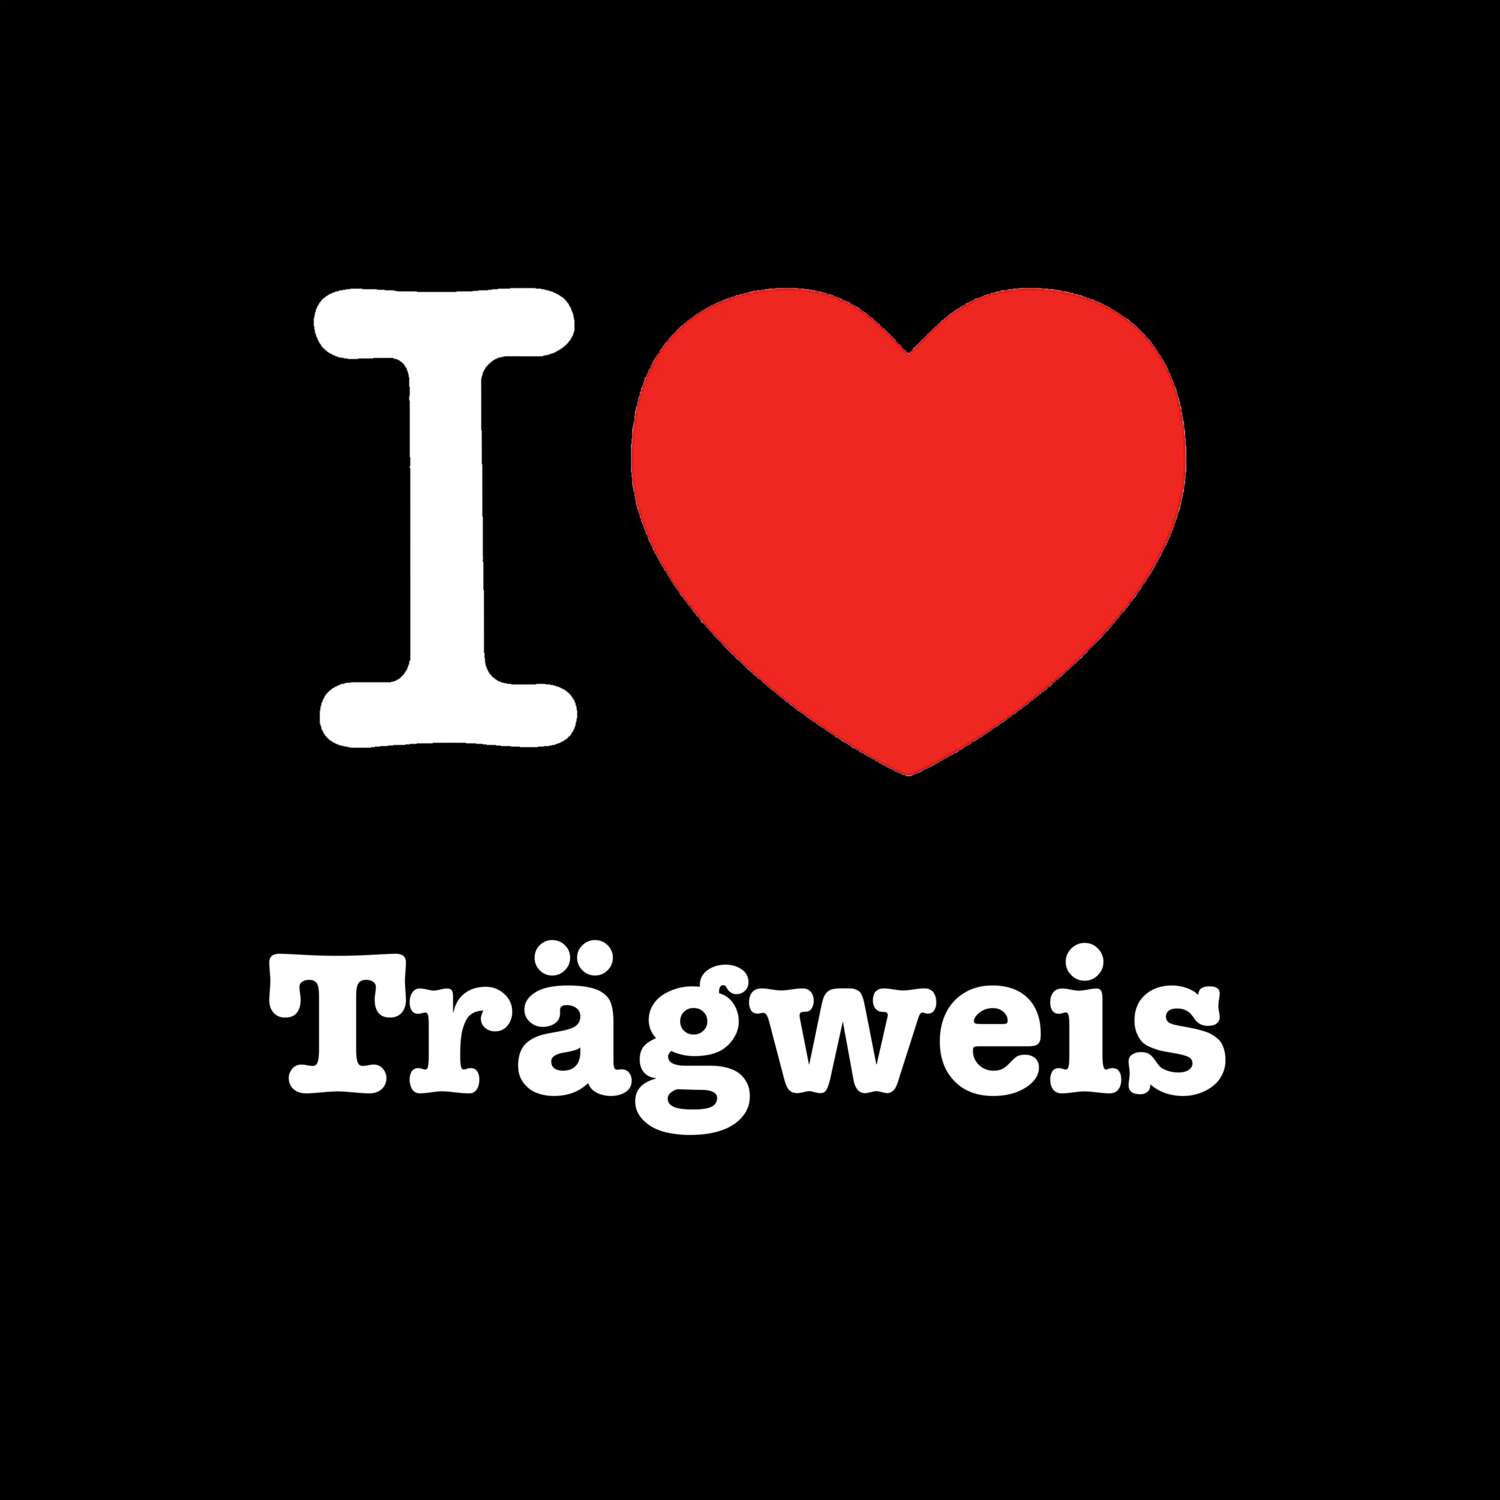 Trägweis T-Shirt »I love«